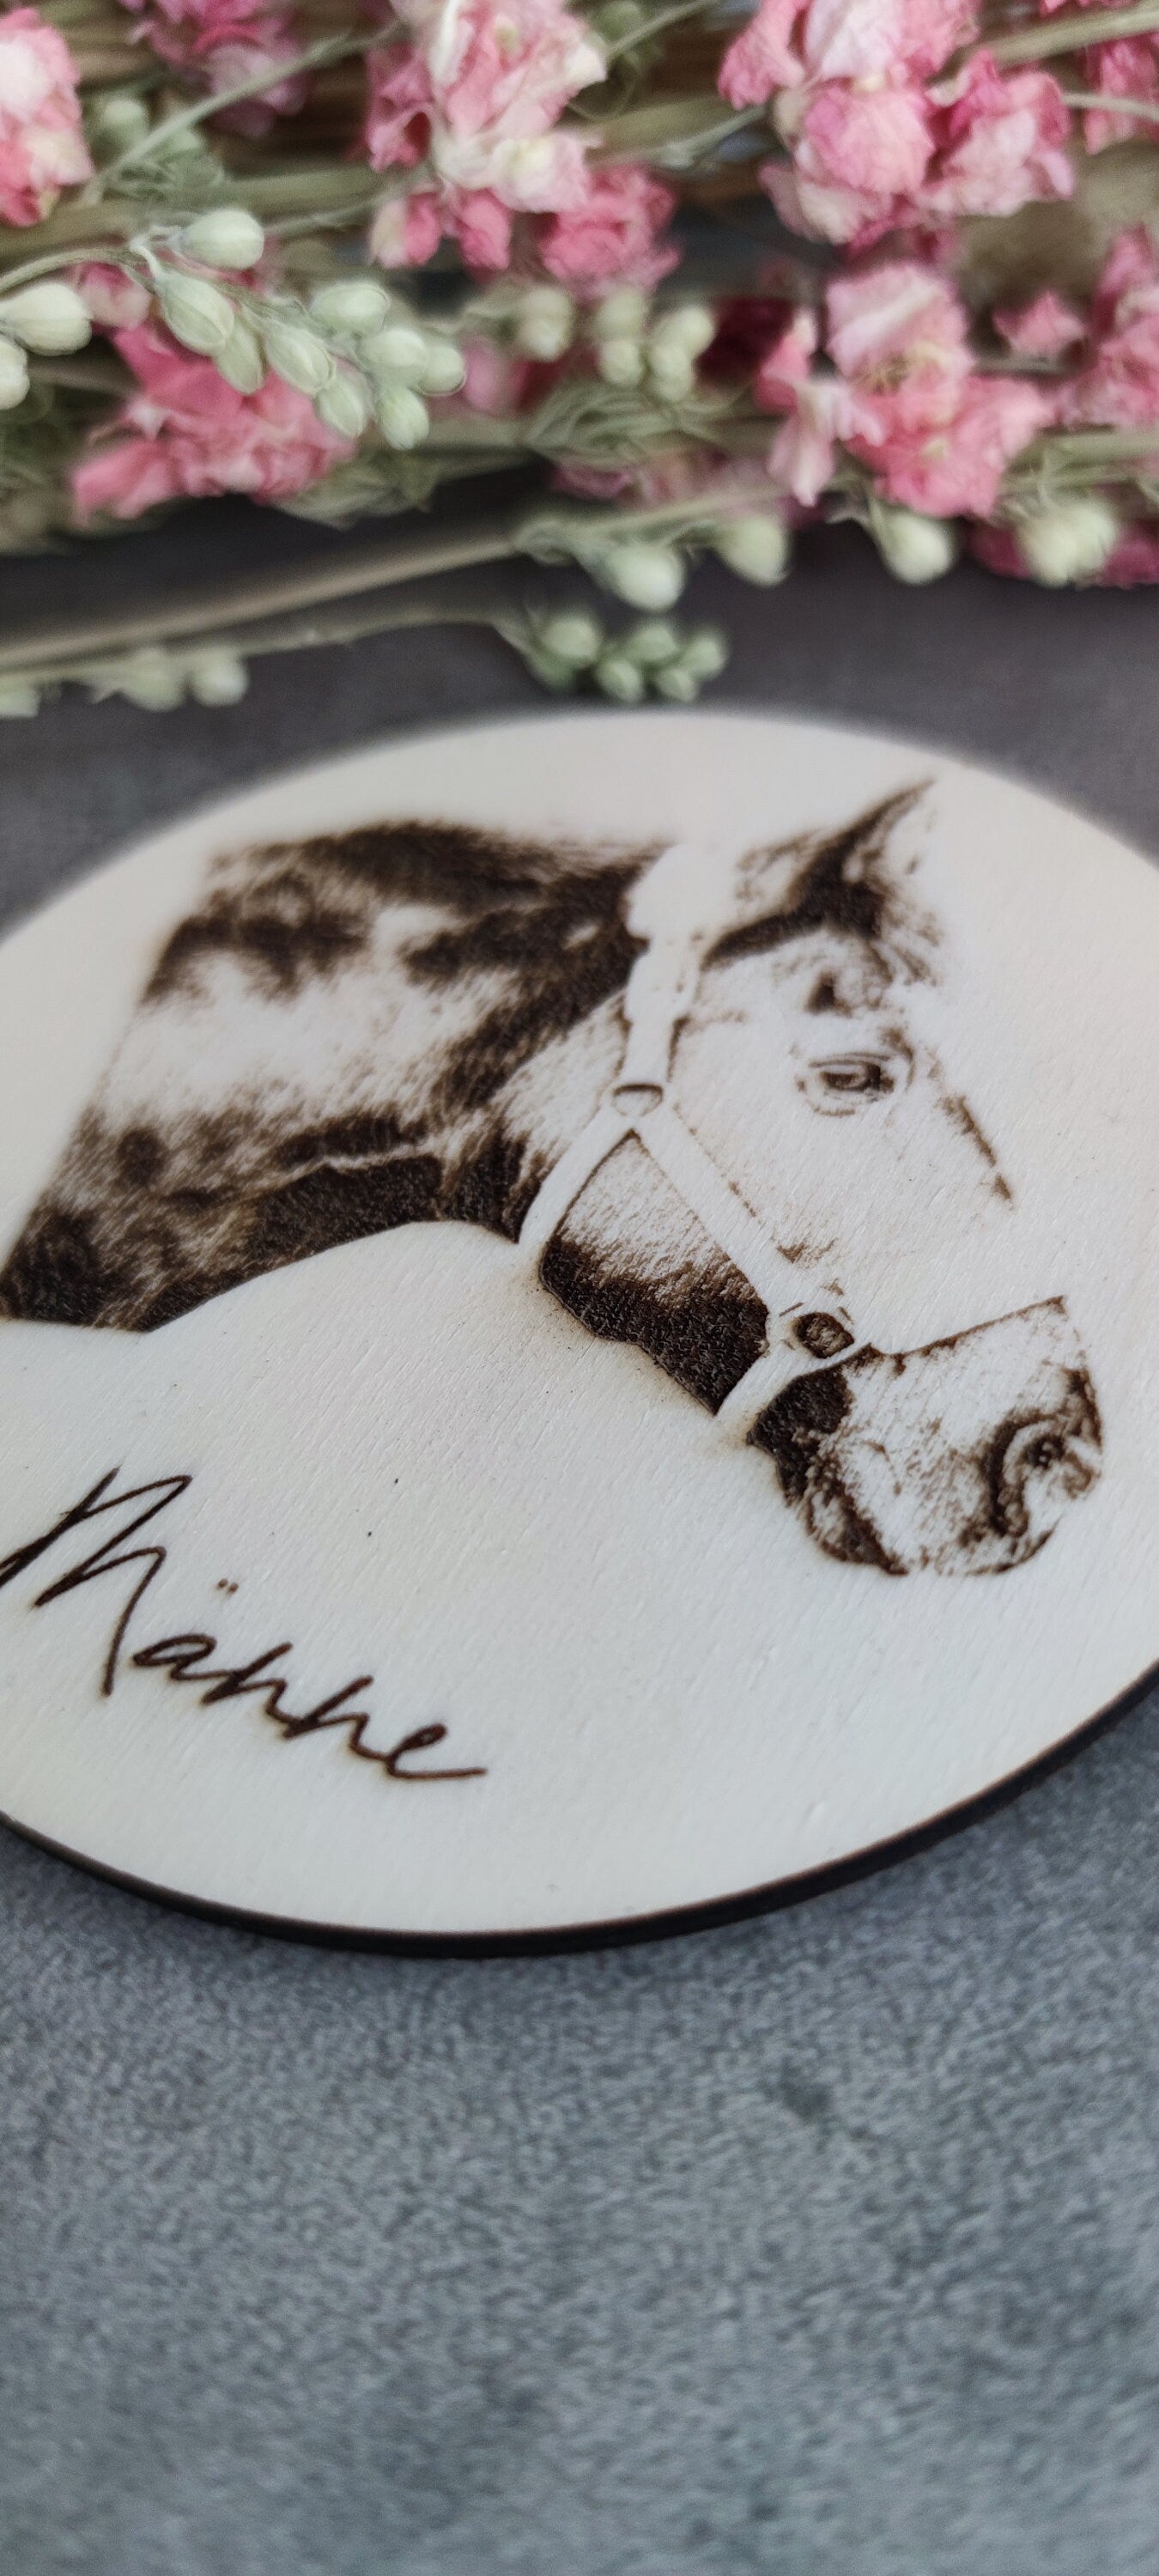 Photo engraving on wood/Photo engraving horse/Photo engraving dog/Photo engraving cat/Photo engraving child/